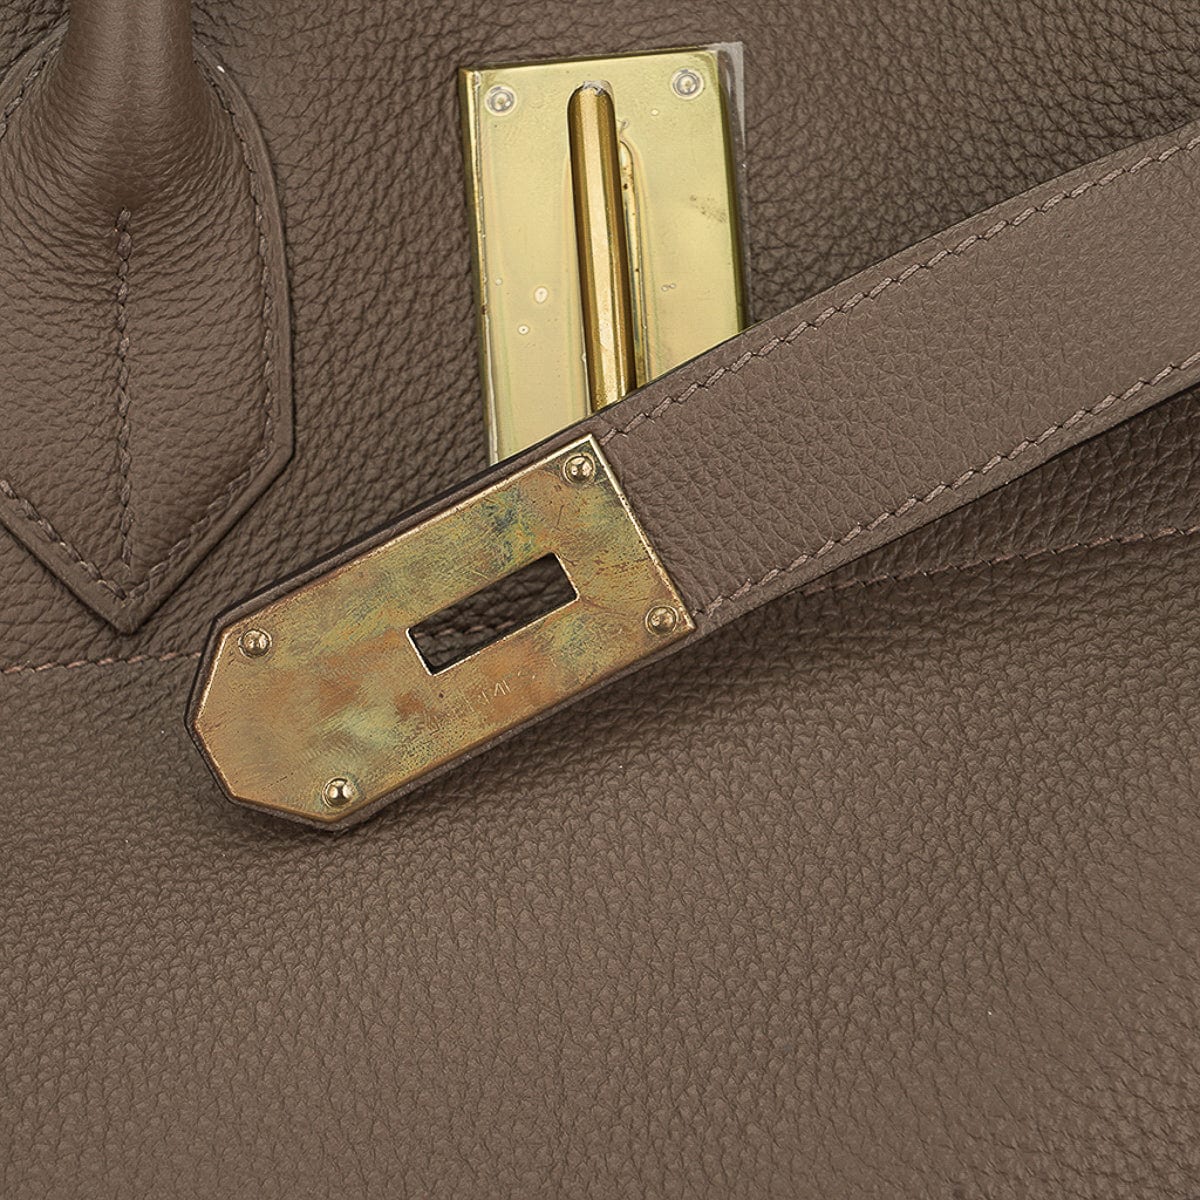 Hermès Togo HAC Birkin 50 - Brown Luggage and Travel, Handbags - HER507267